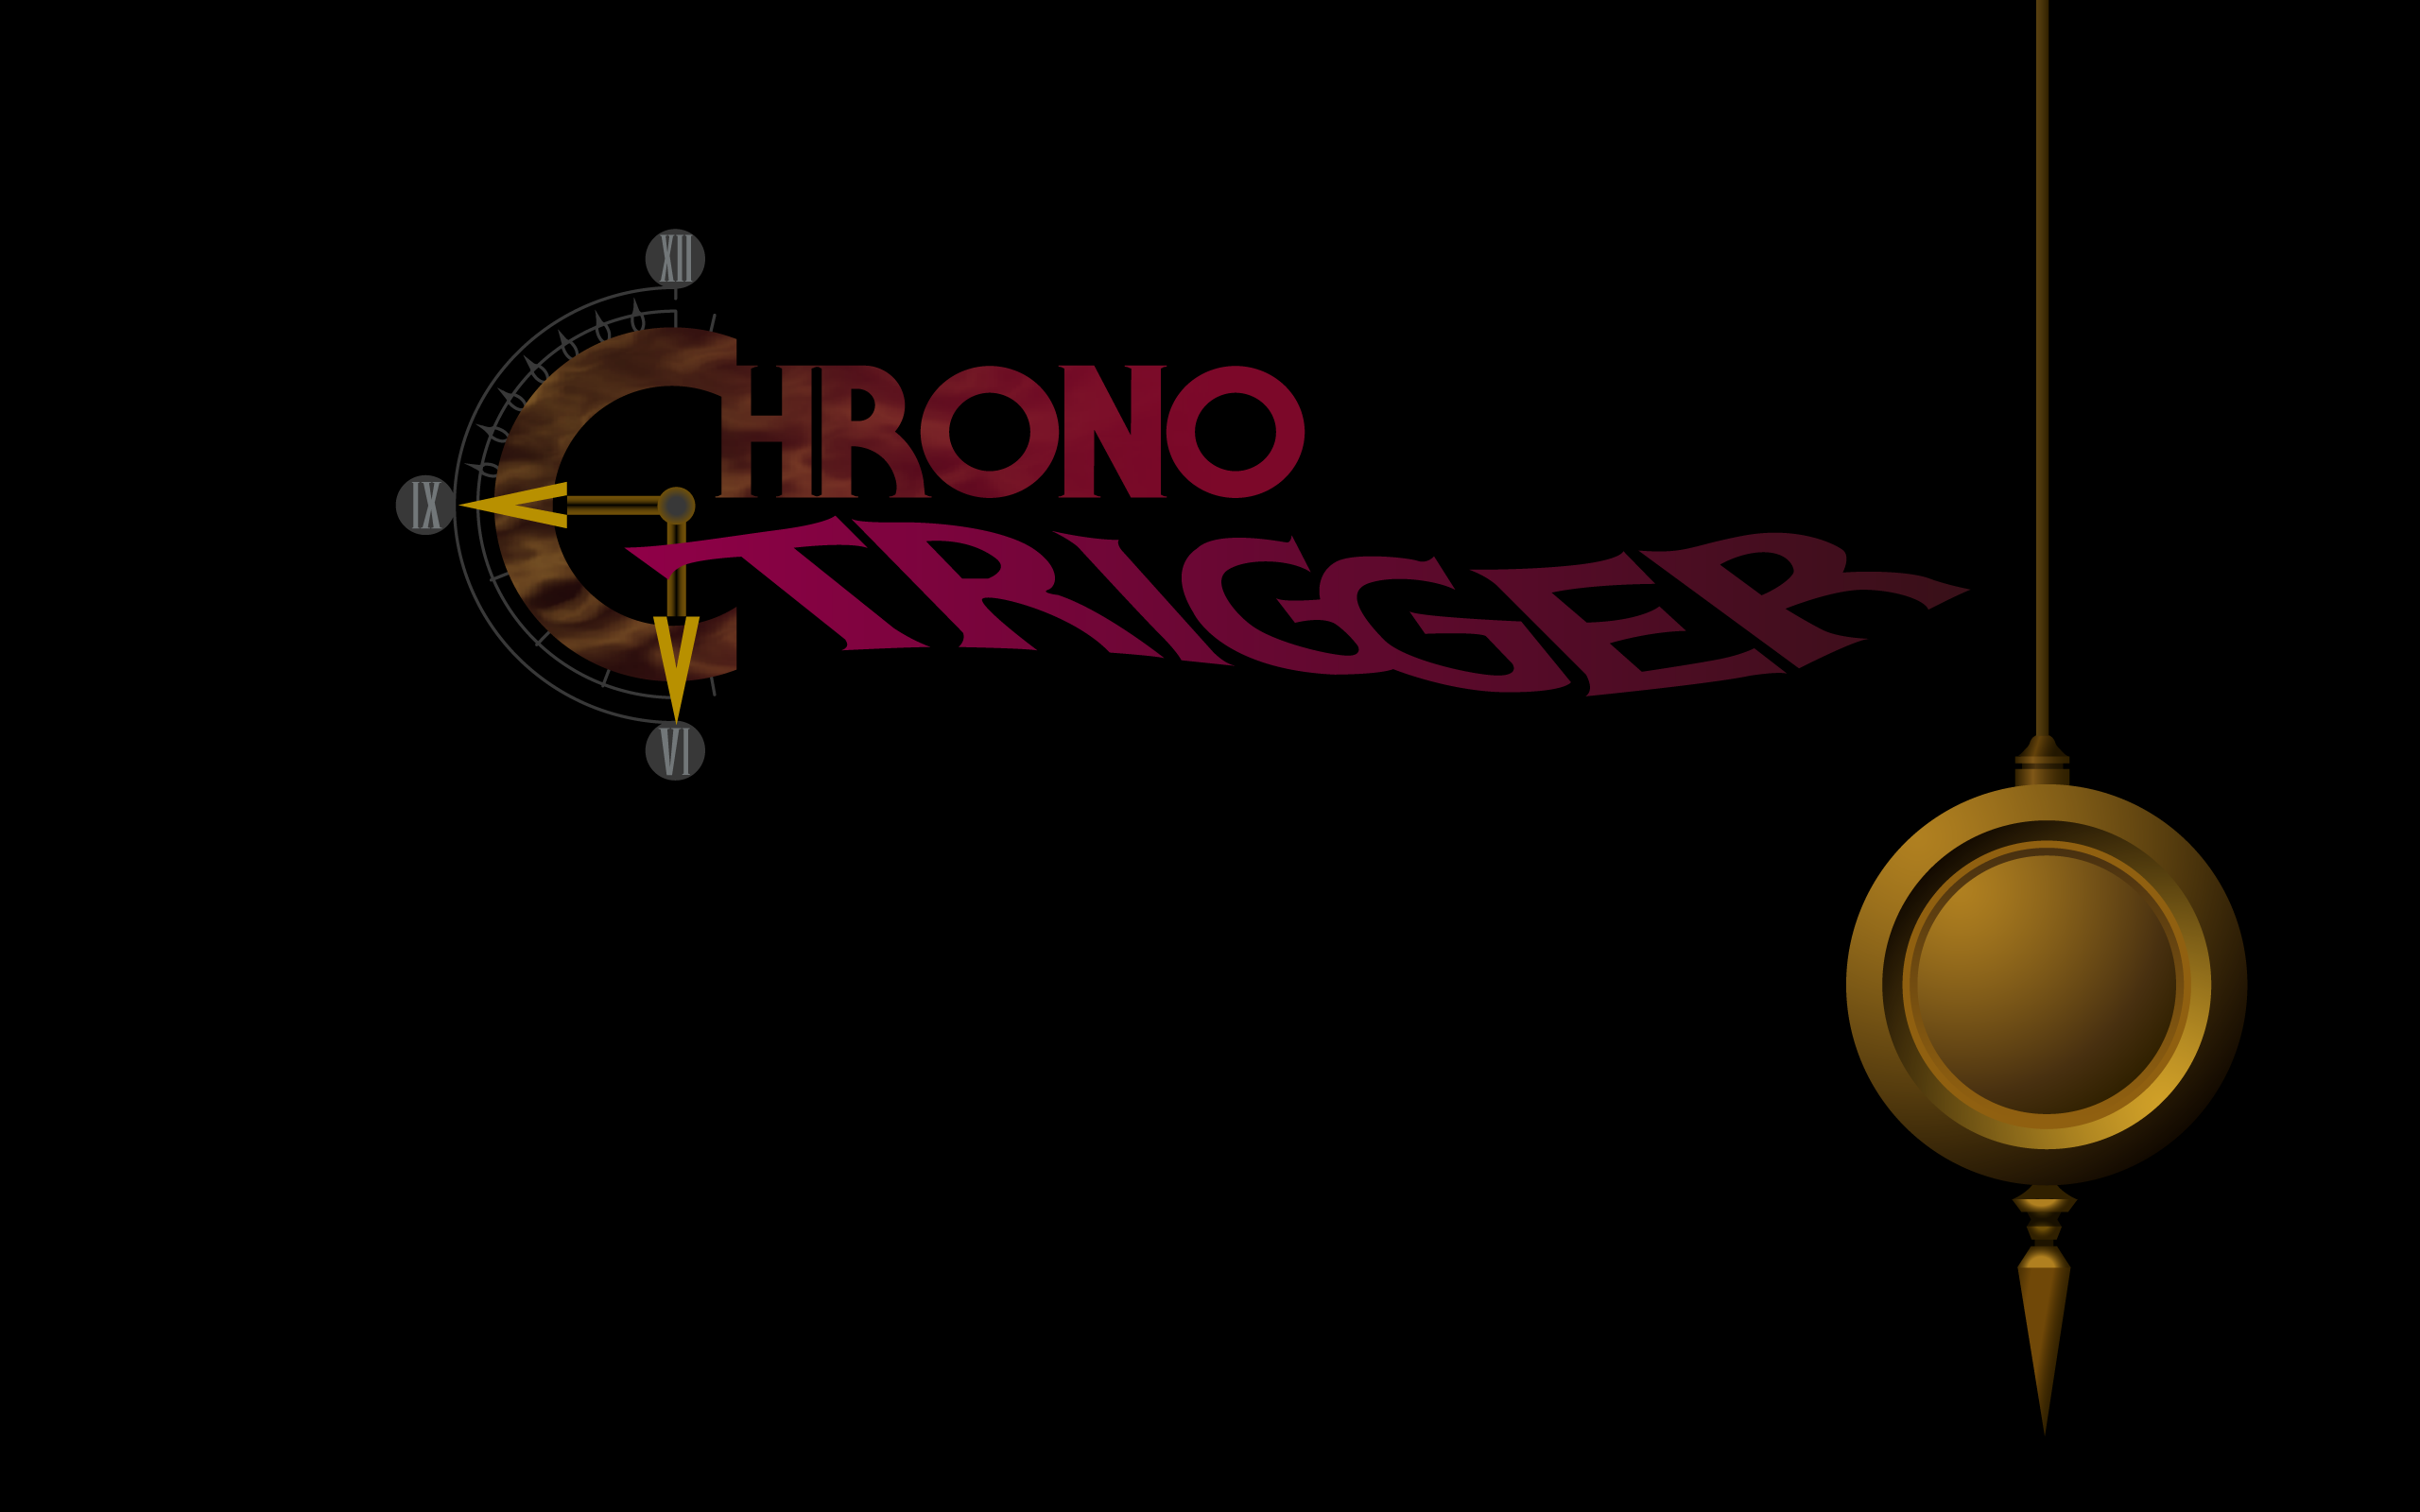 Chrono Trigger Desktop Wallpaper